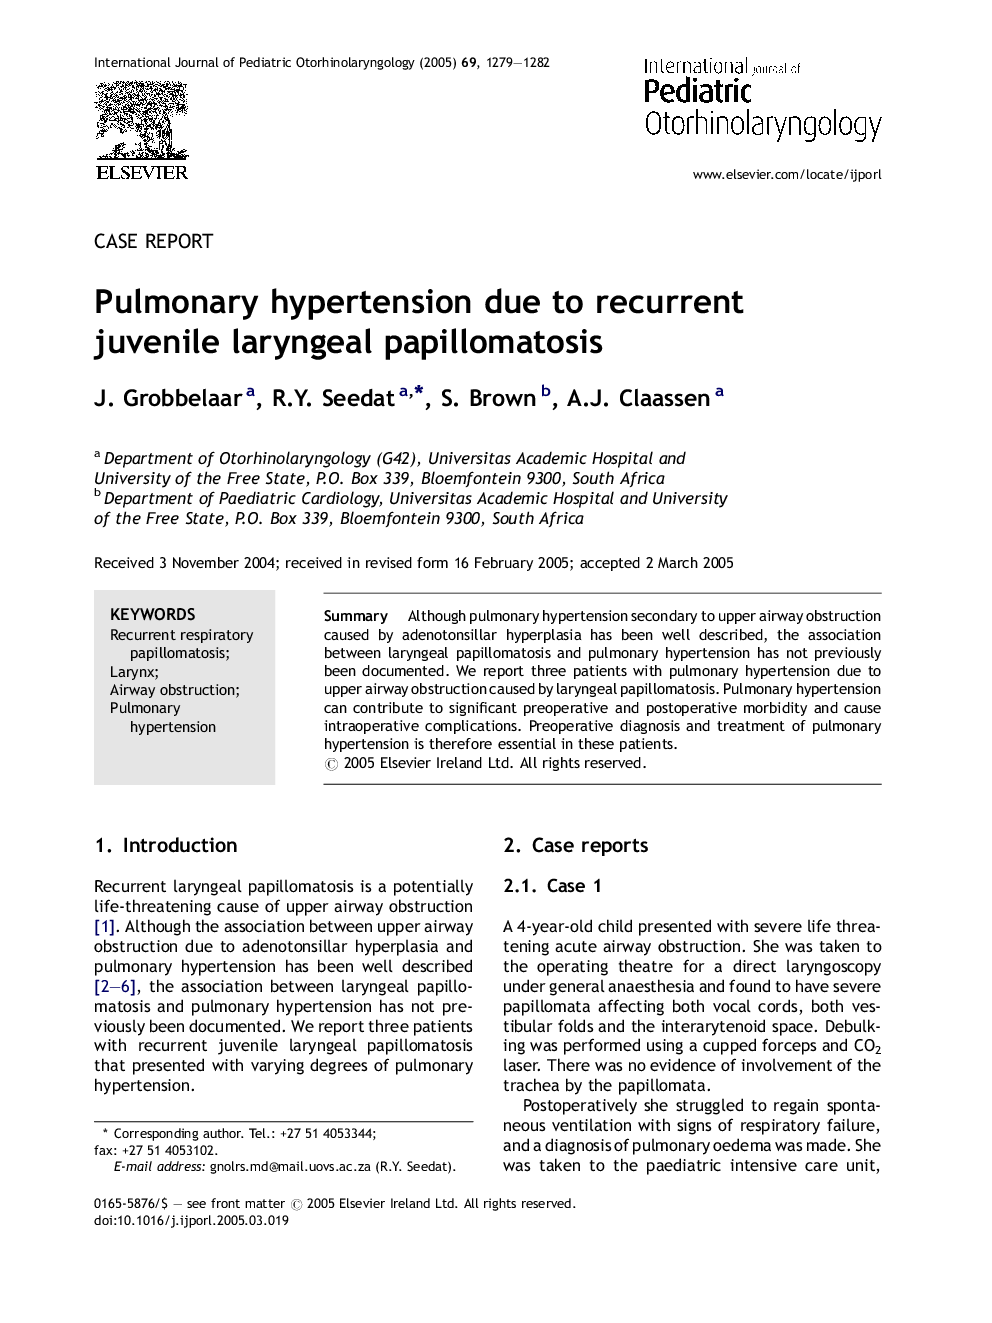 Pulmonary hypertension due to recurrent juvenile laryngeal papillomatosis